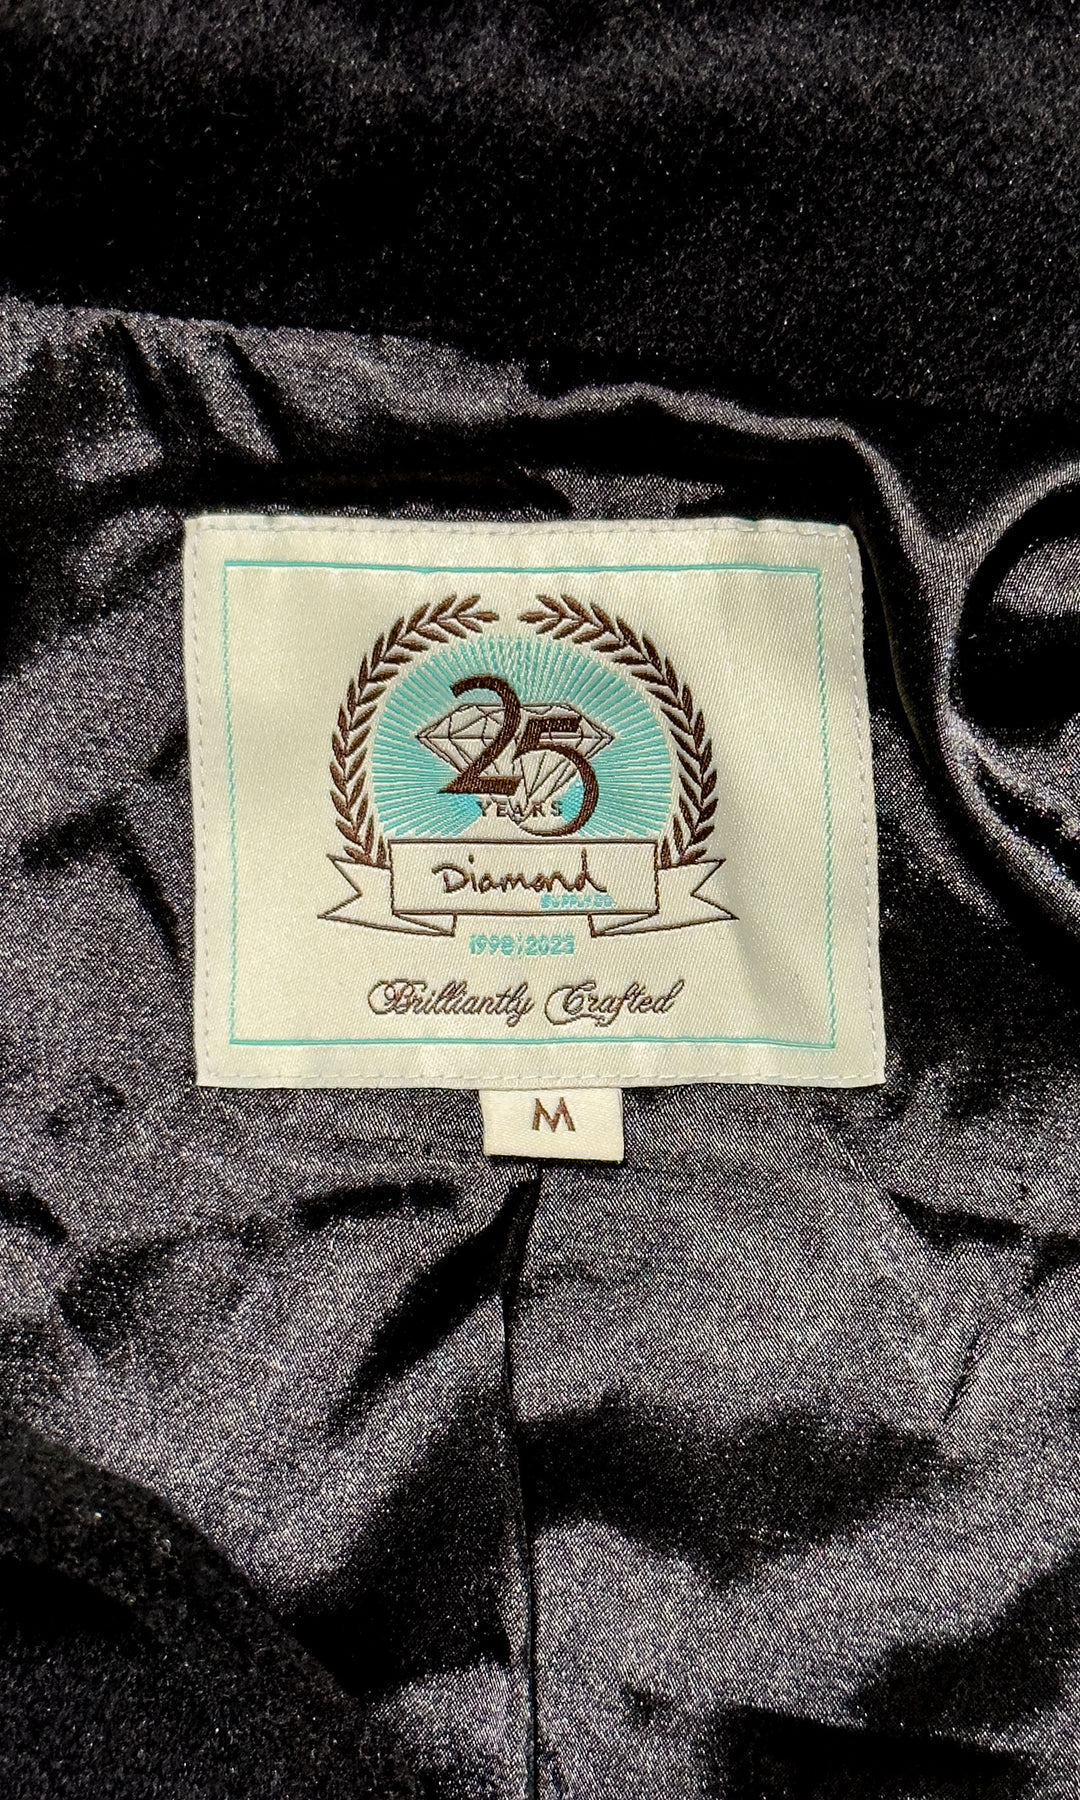 Diamond Supply anniversary varsity jacket